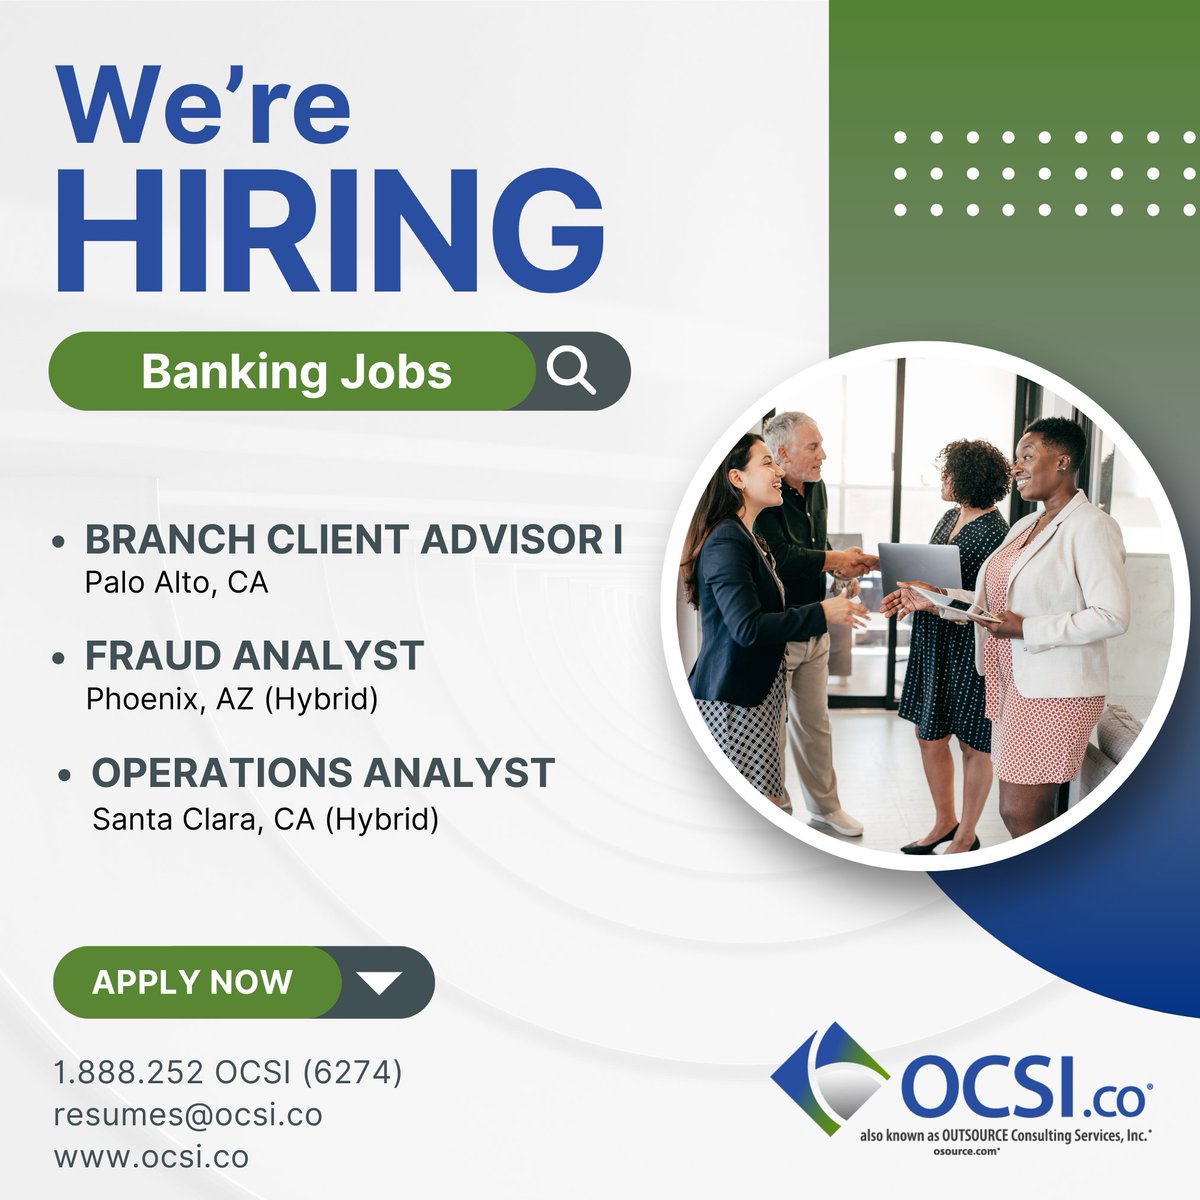 Join our team of Banking Professionals! Apply now at ocsi.co/job-seekers/.
#OCSIcoJobs #bankingjobs #phoenixjobs #bayareajobs #contractjobs #tellerjobs #fraudanalyst #hiring #jobopportunity #jobs #staffingagency #werehiring #careeropportunity #joinus #jobs #recruiting